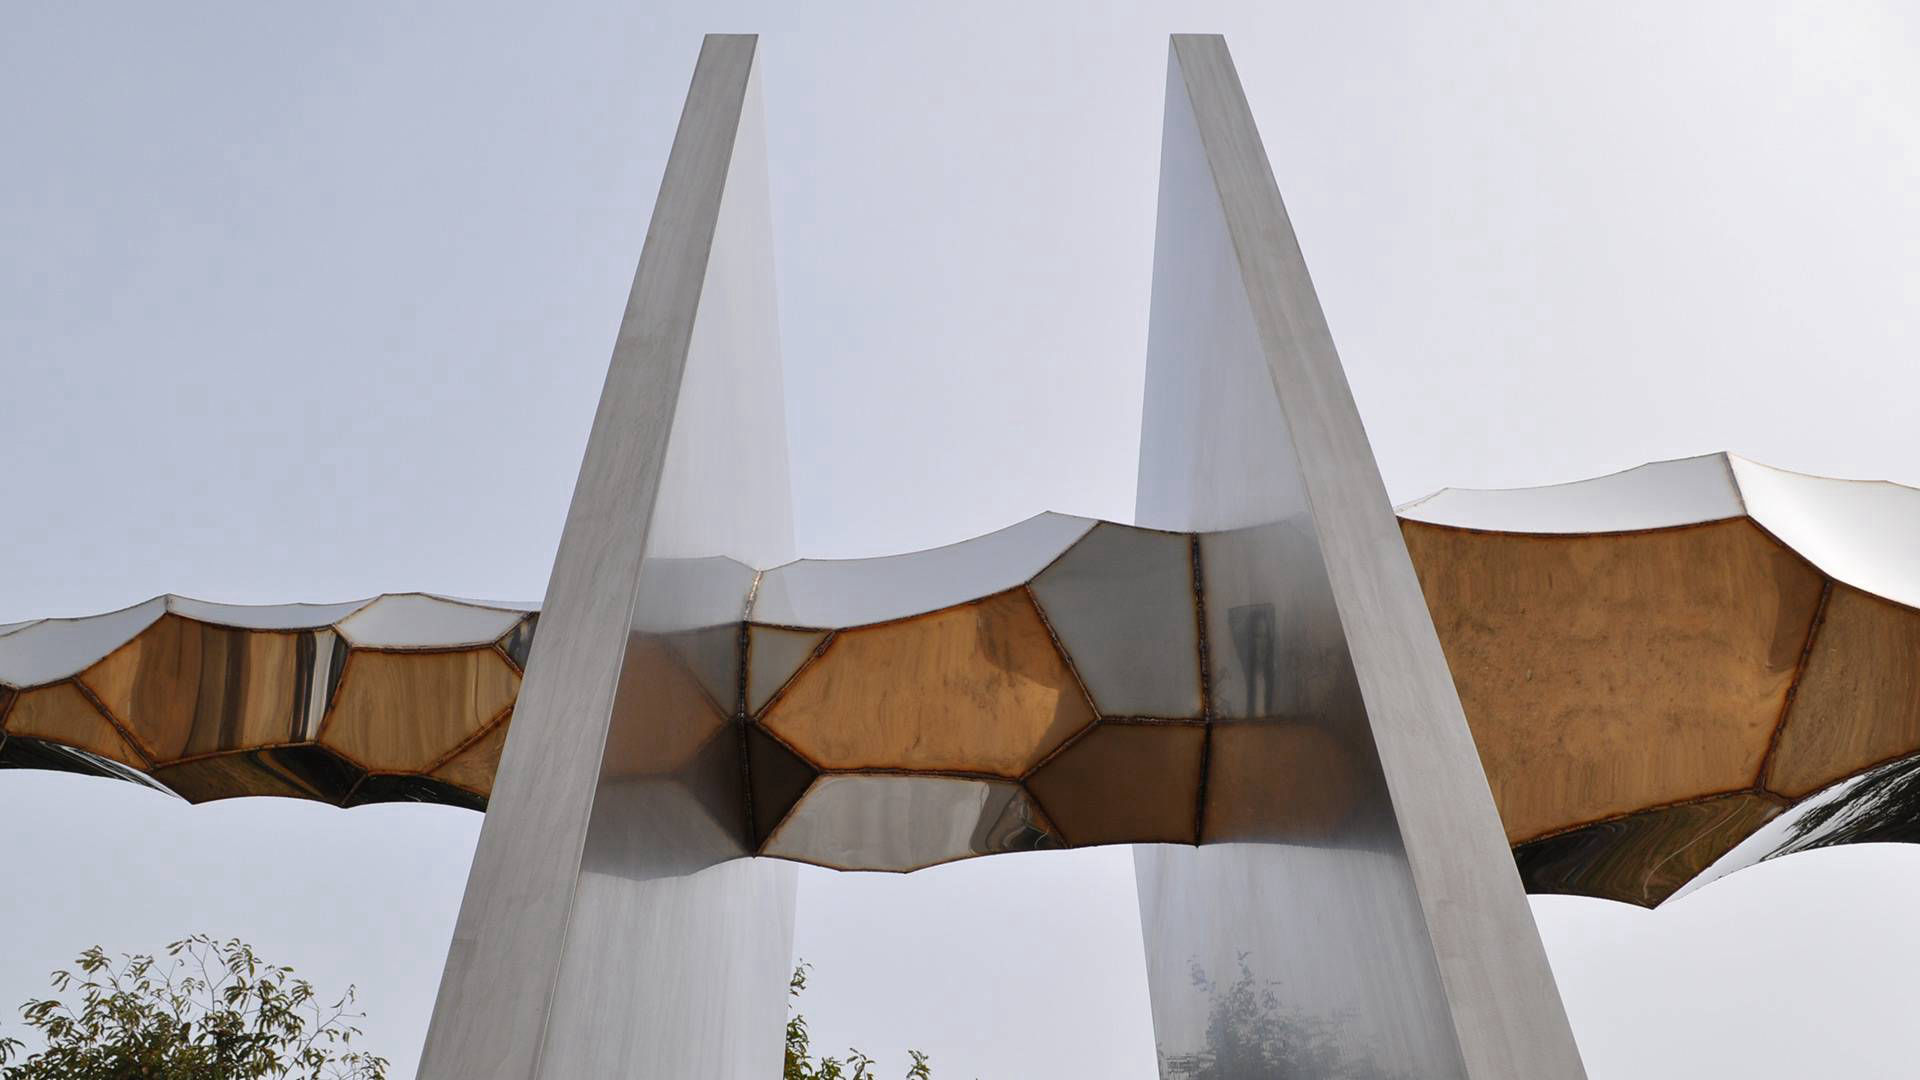 Transition - stainless steel sculpture by Heath Satow in Icheon South Korea CA